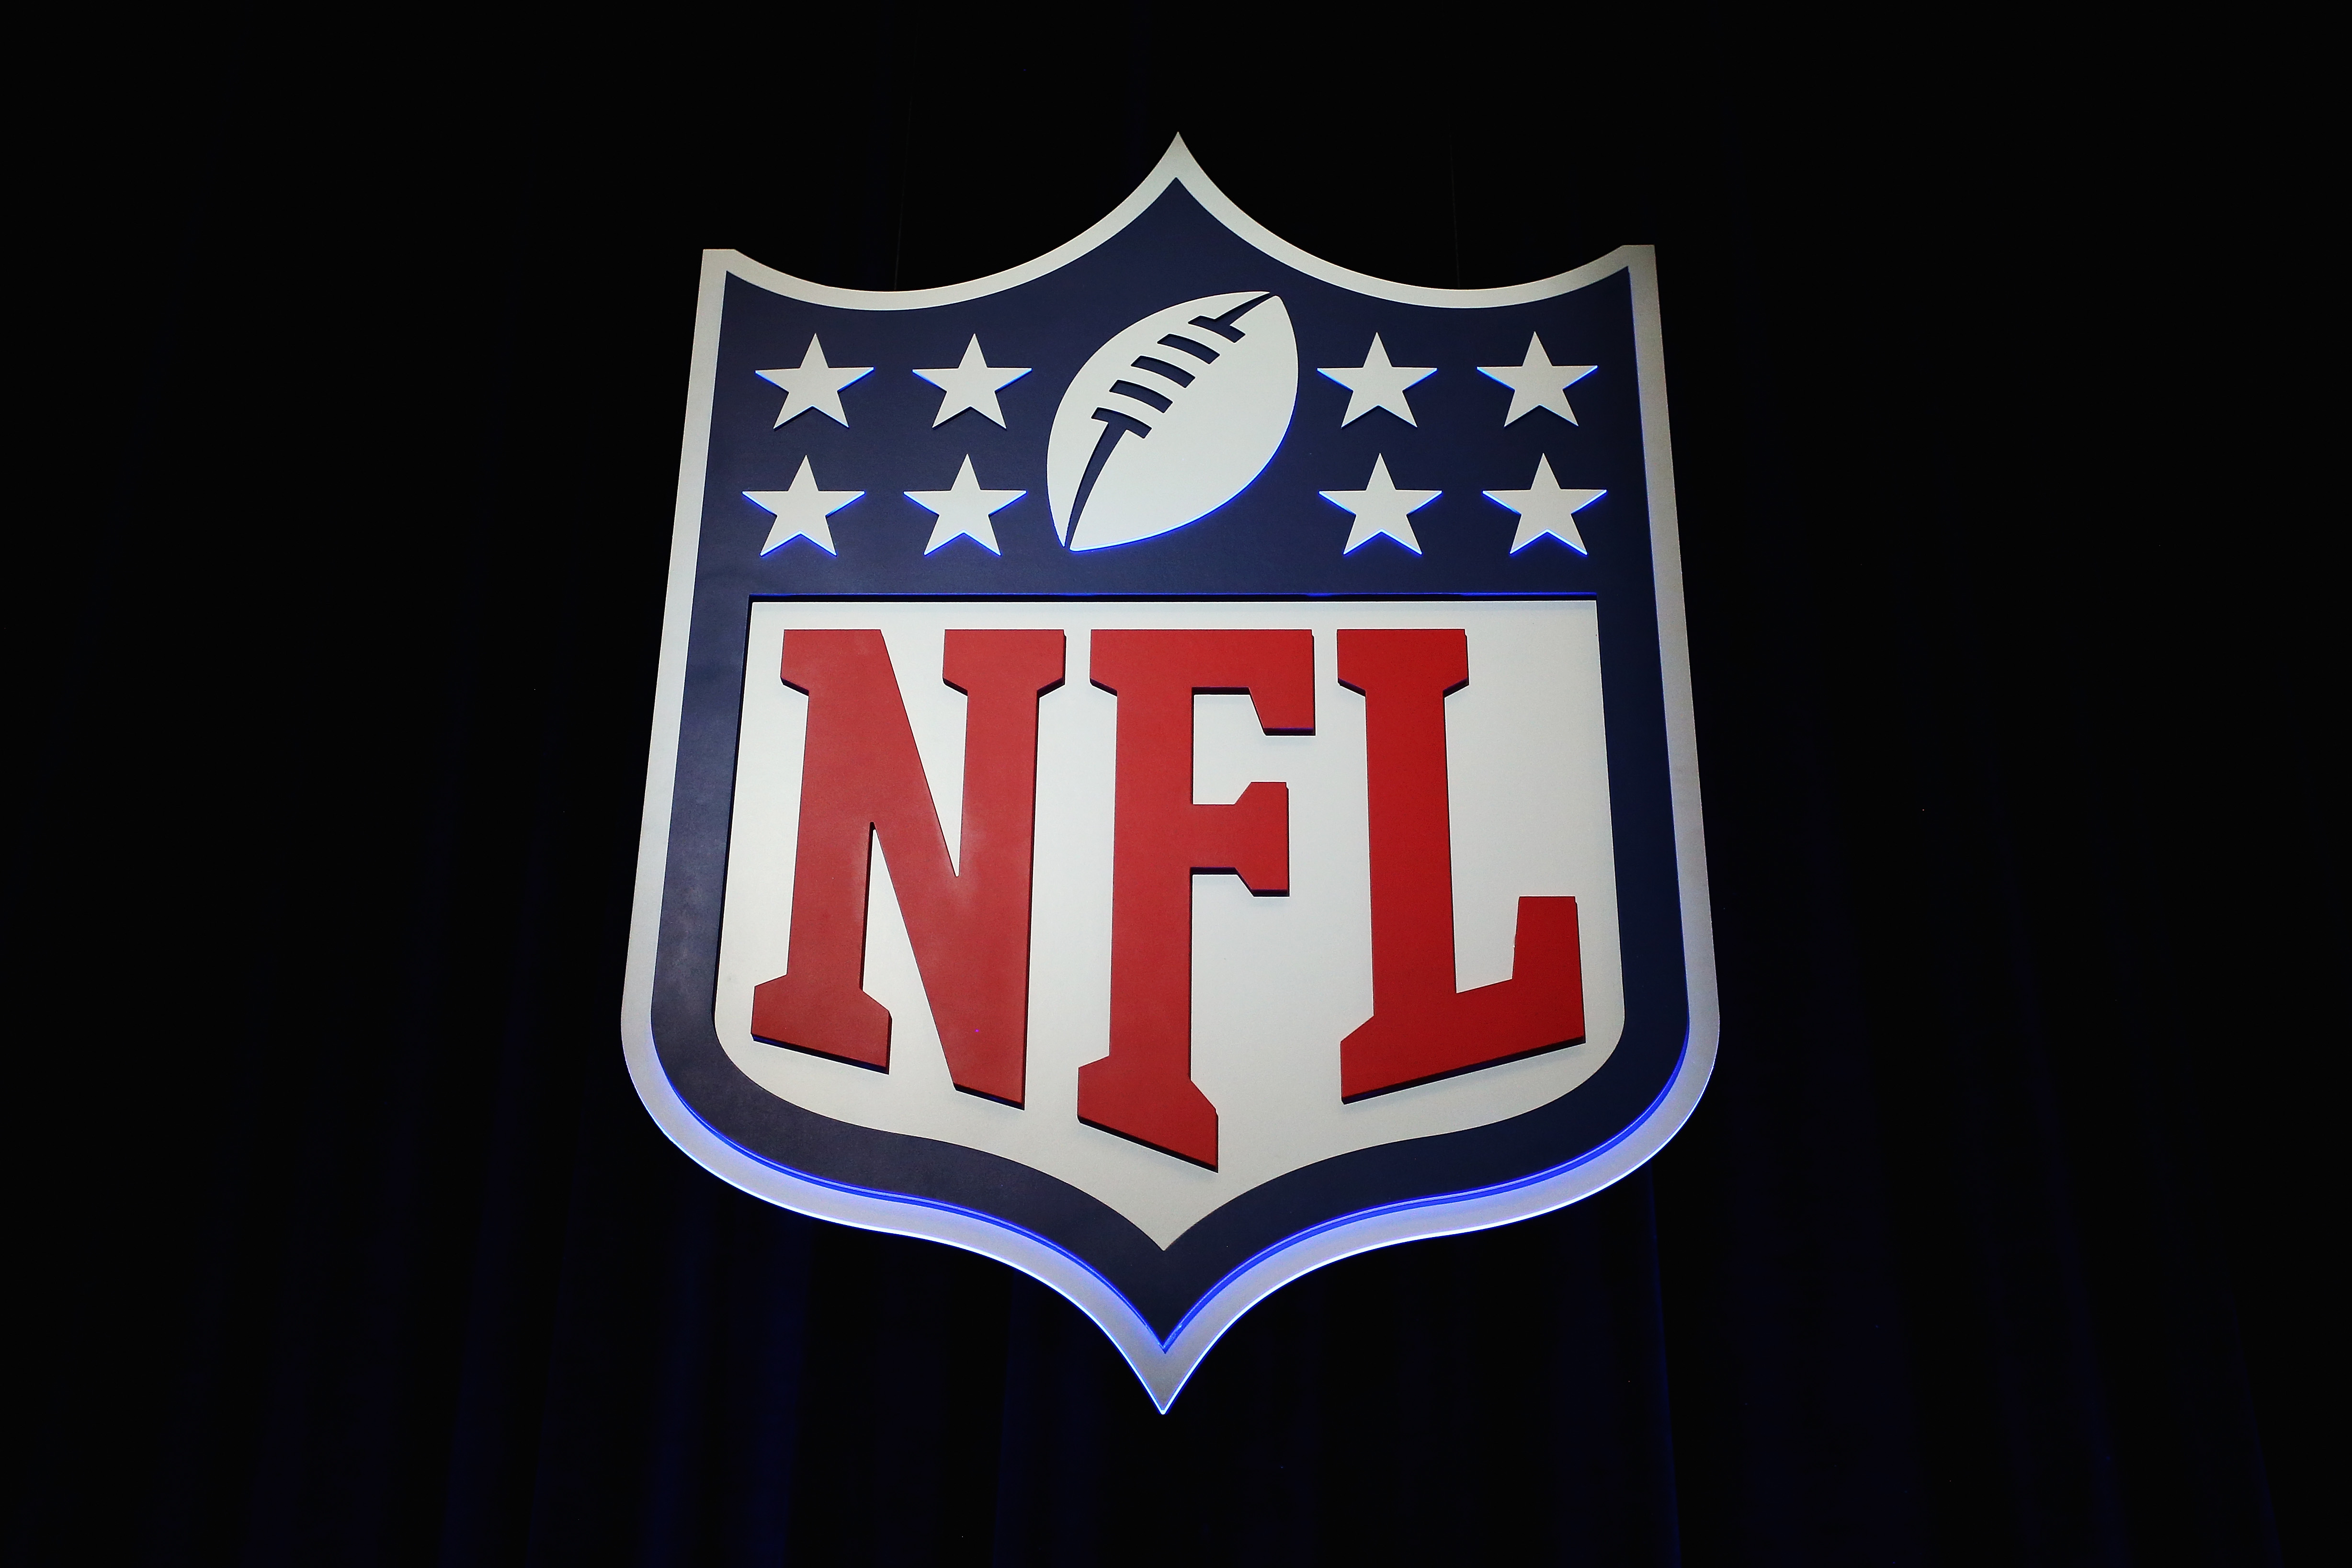 The NFL shield logo